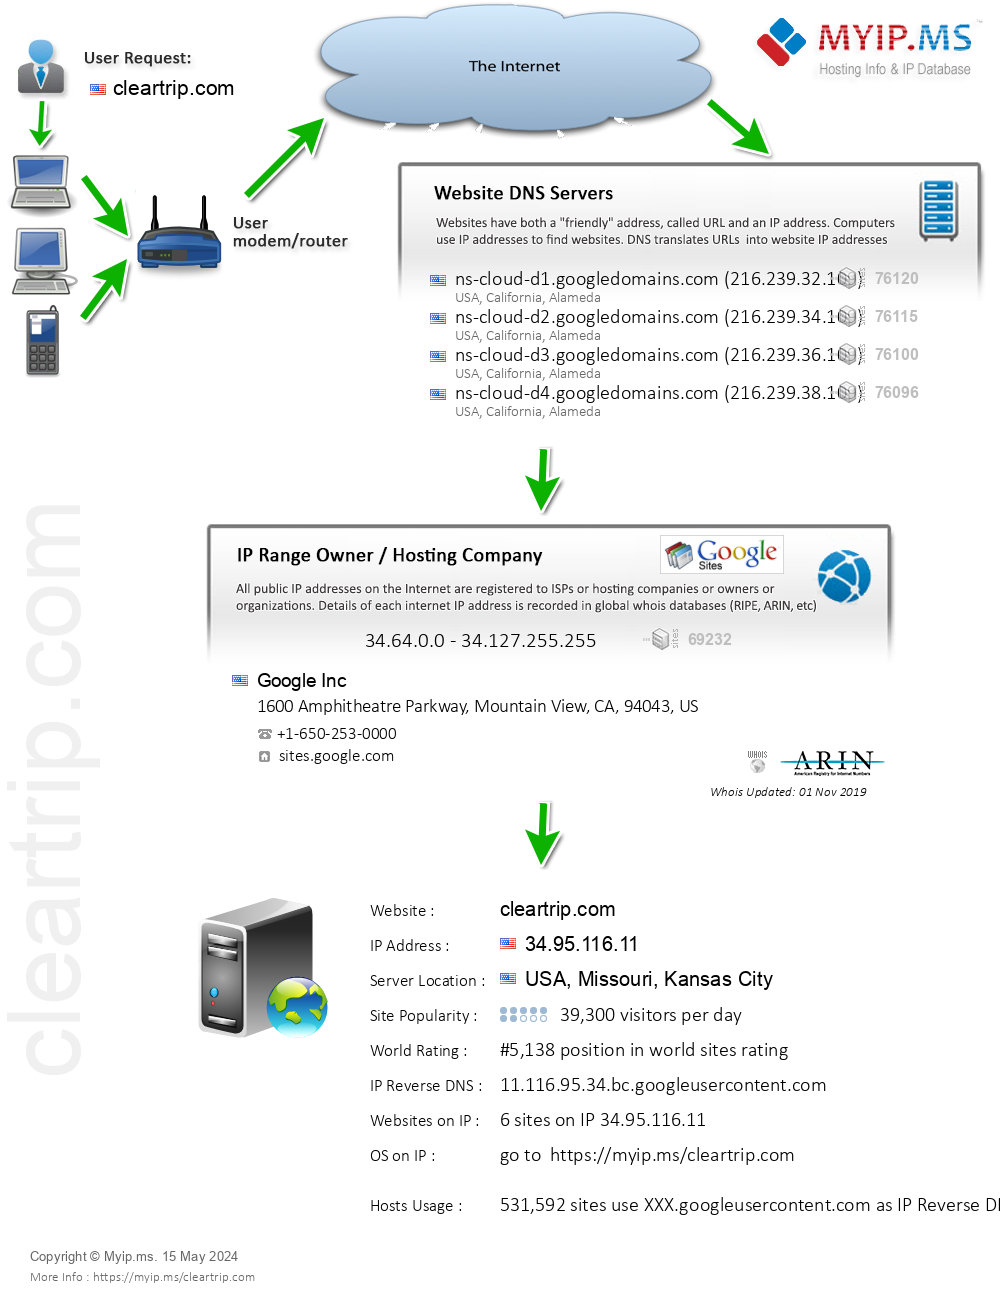 Cleartrip.com - Website Hosting Visual IP Diagram